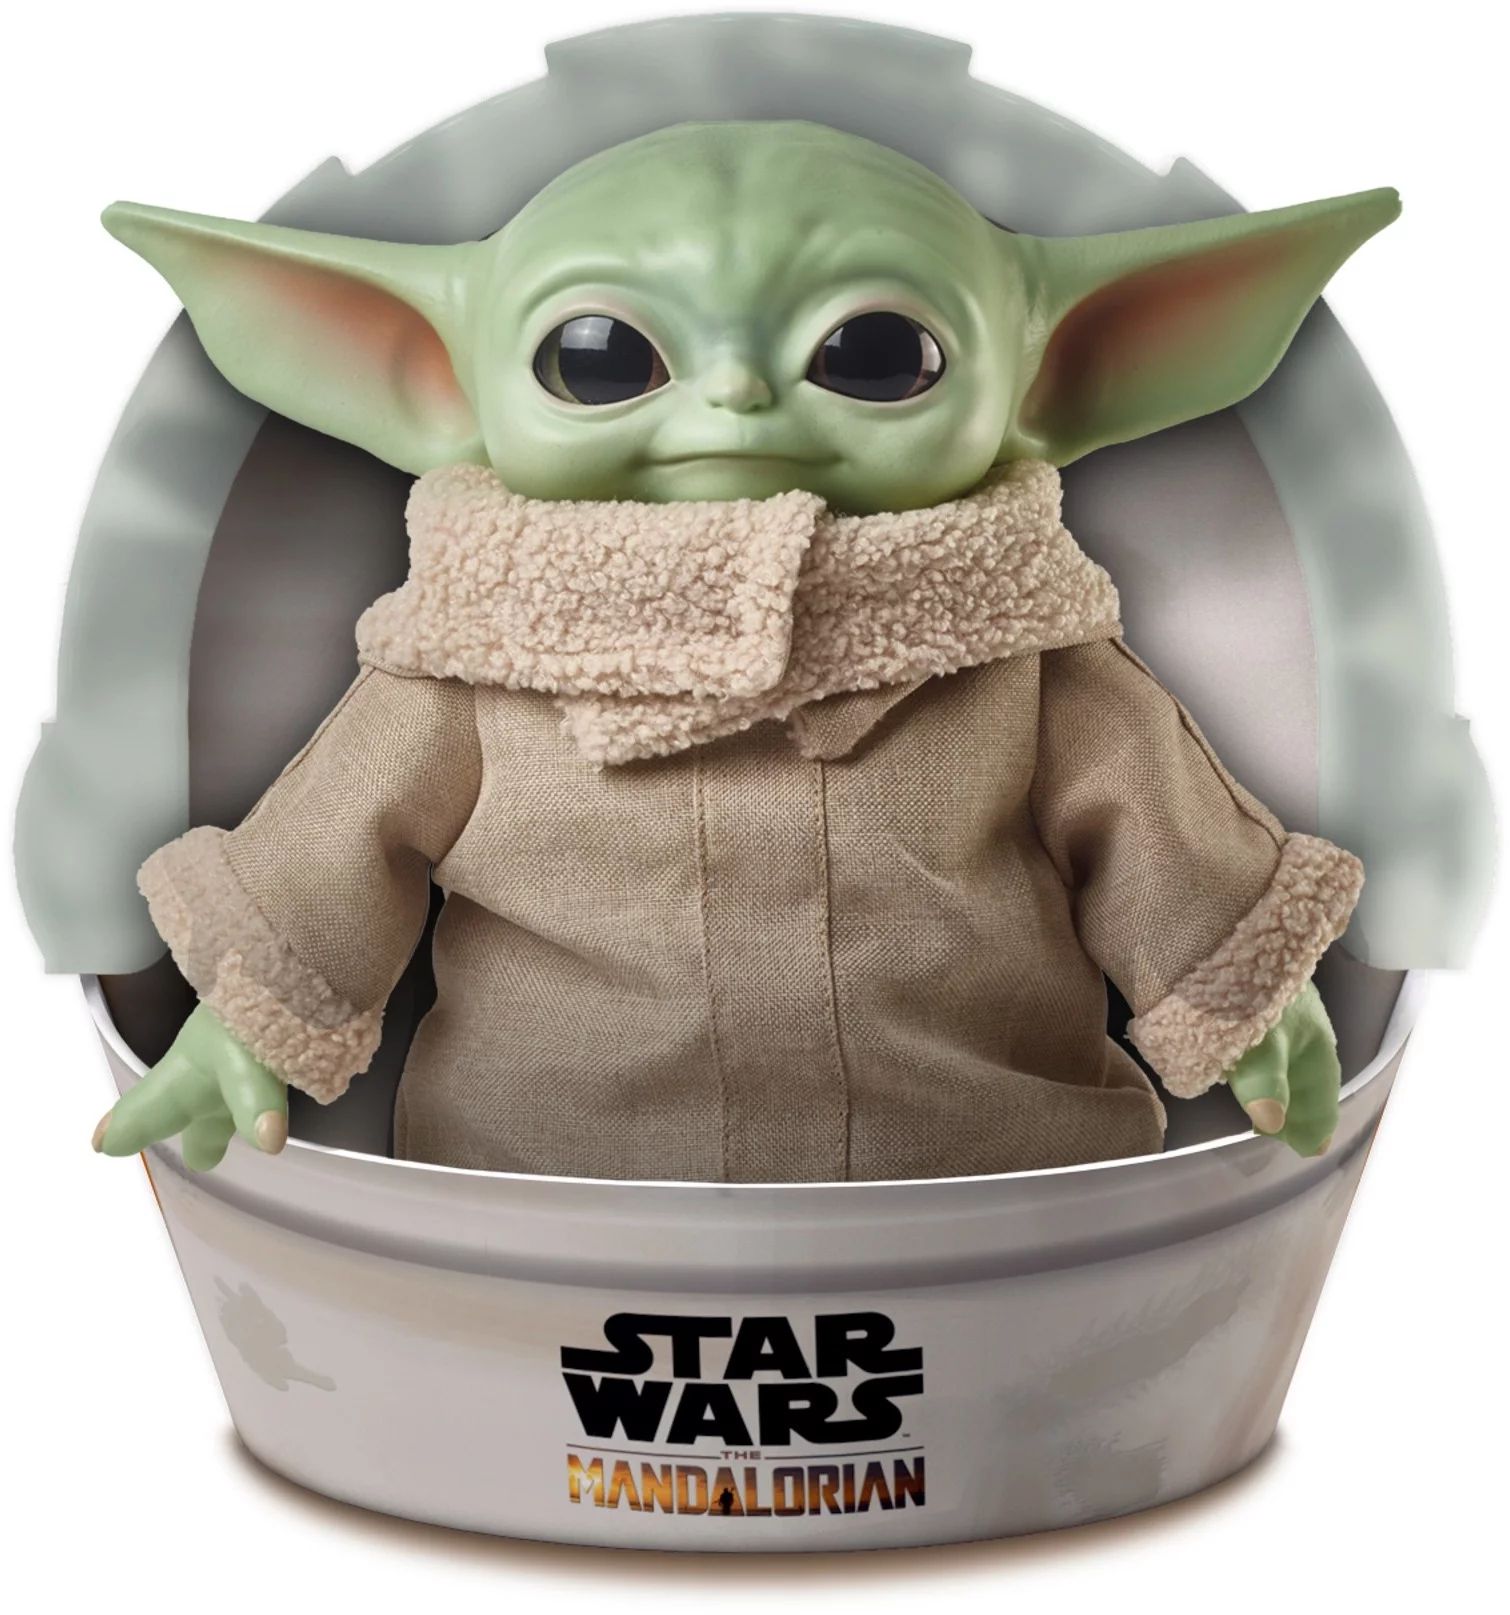 Star Wars the Child Plush Toy, 11-Inch Small Baby Yoda Like Soft Figure from the Mandalorian | Walmart (US)